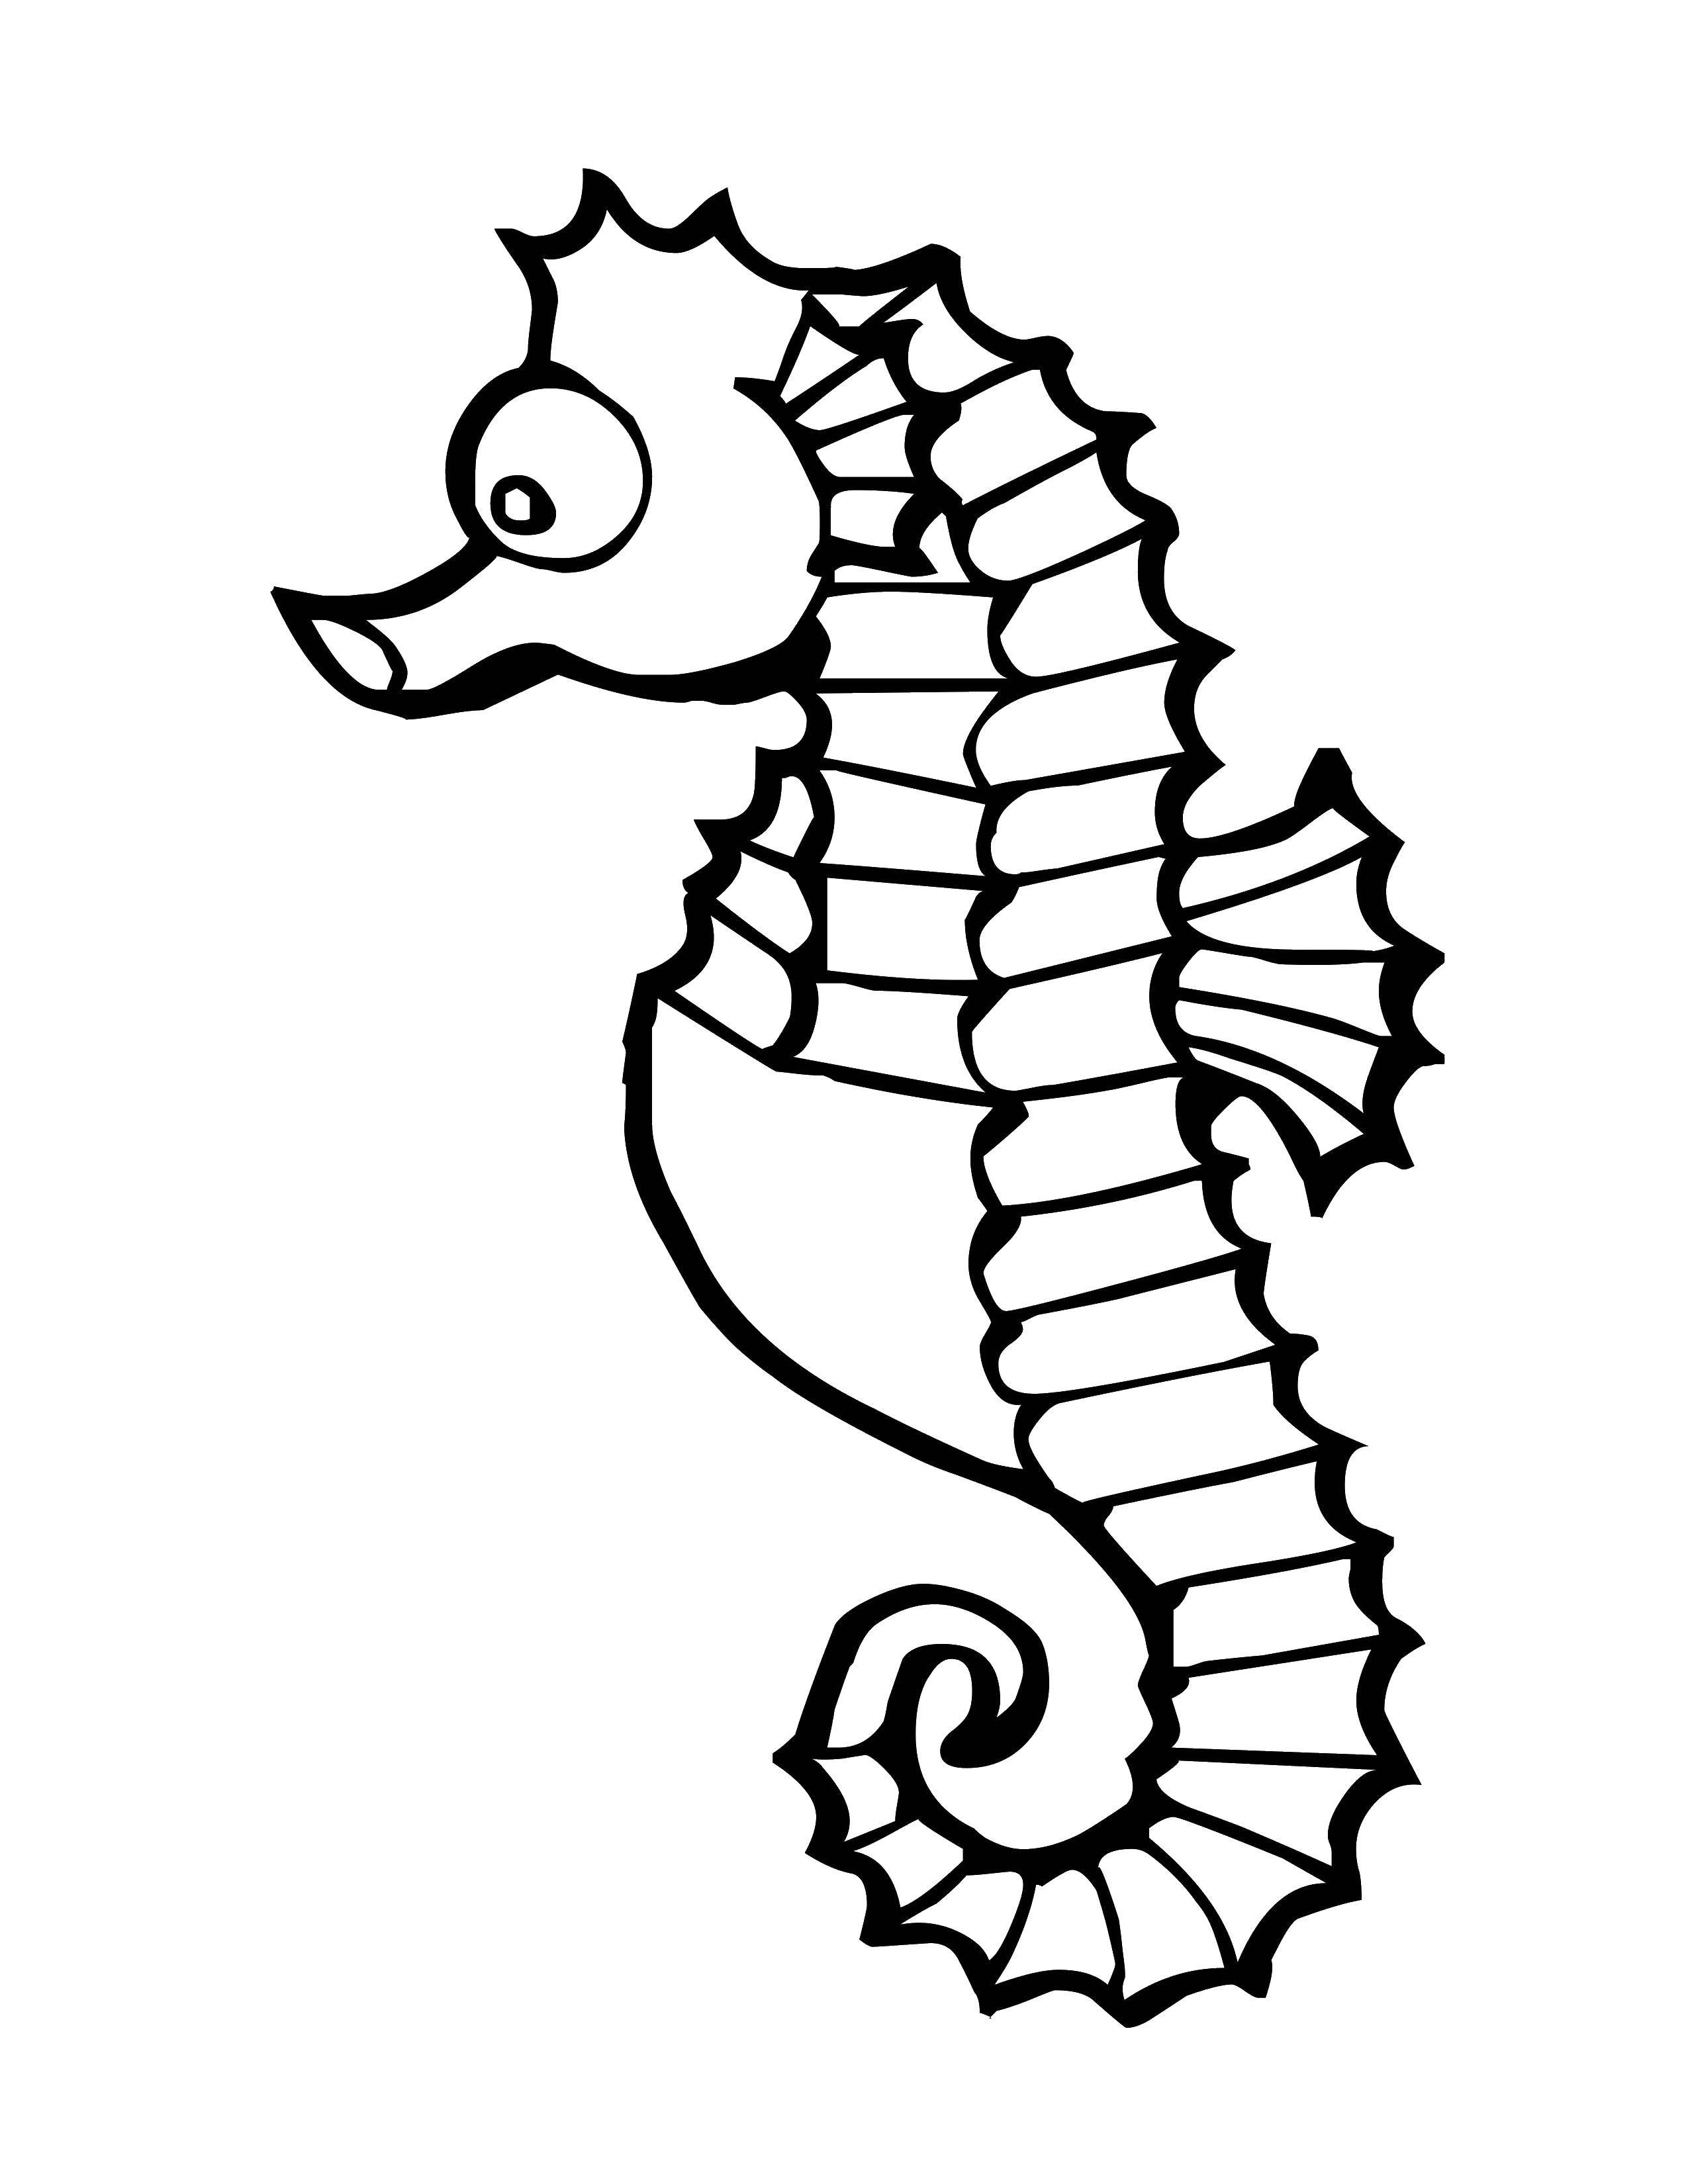 Coloring Seahorse. Category fish. Tags:  seahorse, fish, sea animals.